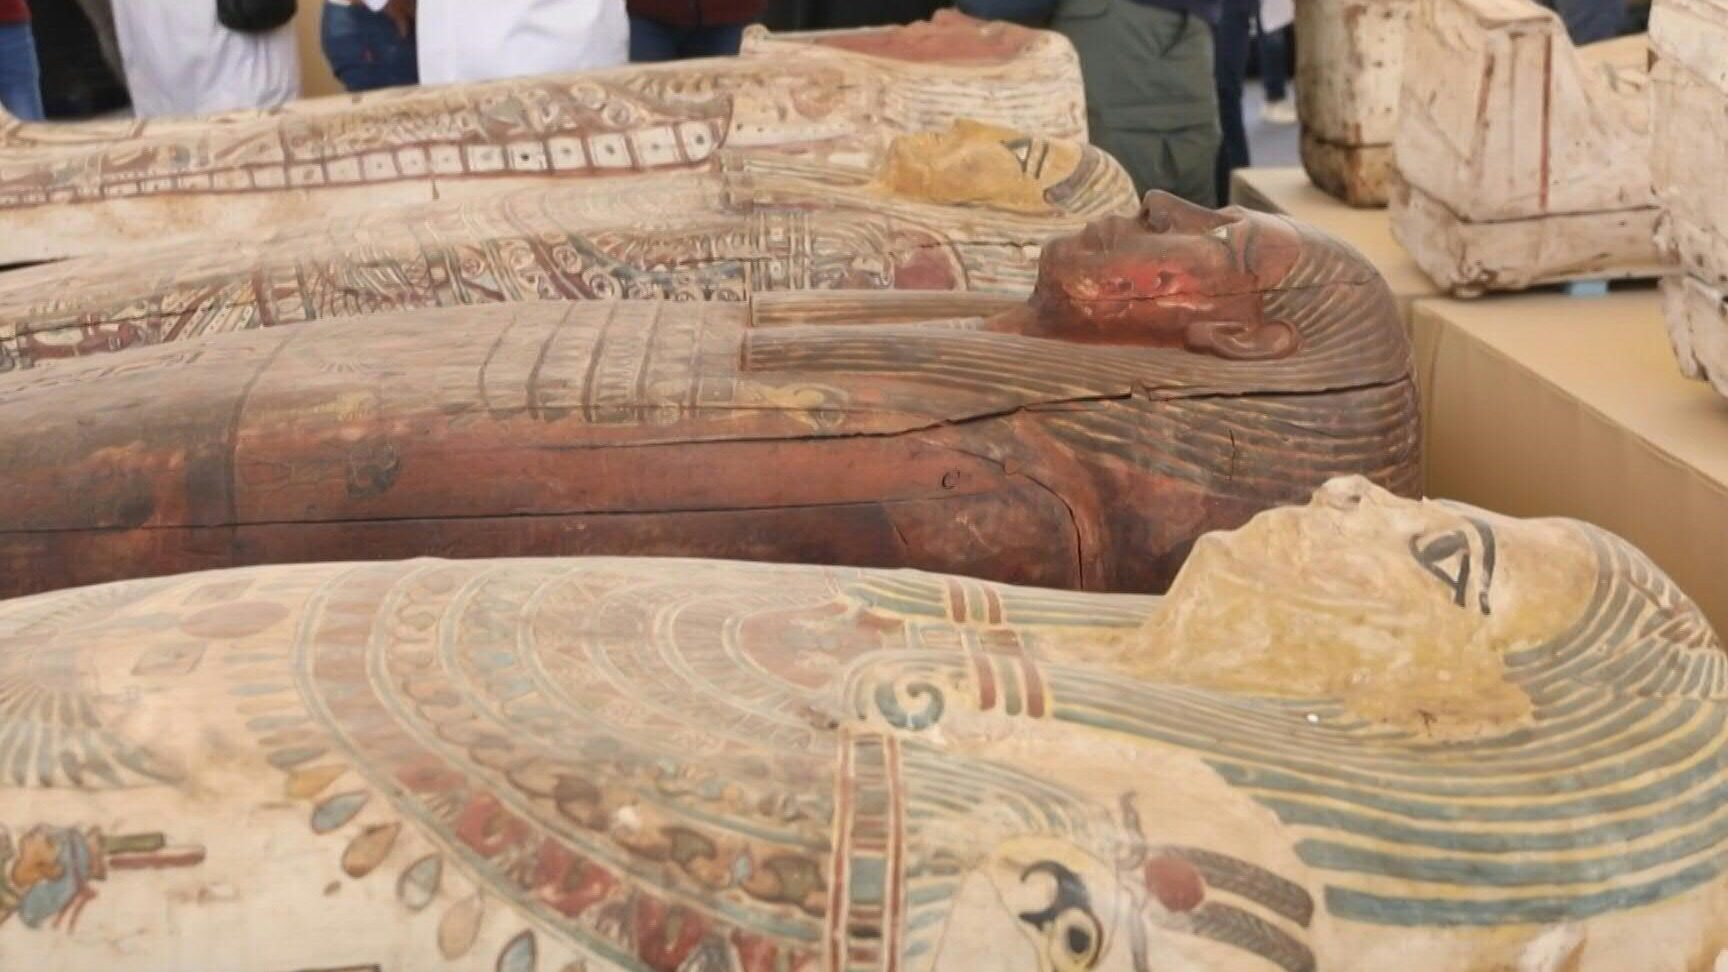 Avances arqueológicos revelan nuevos hallazgos en Egipto